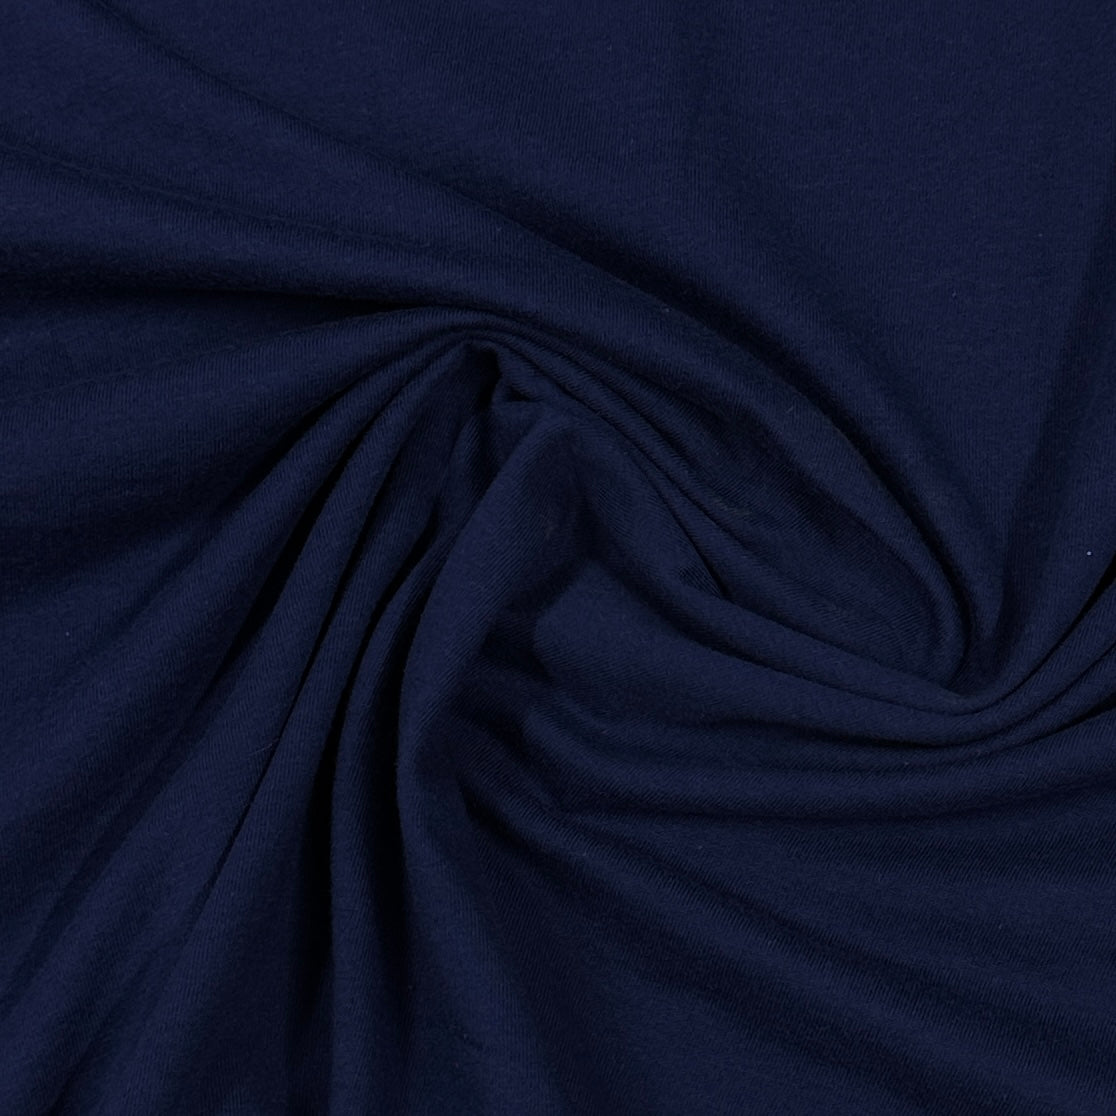 Indigo Cotton Jersey Fabric